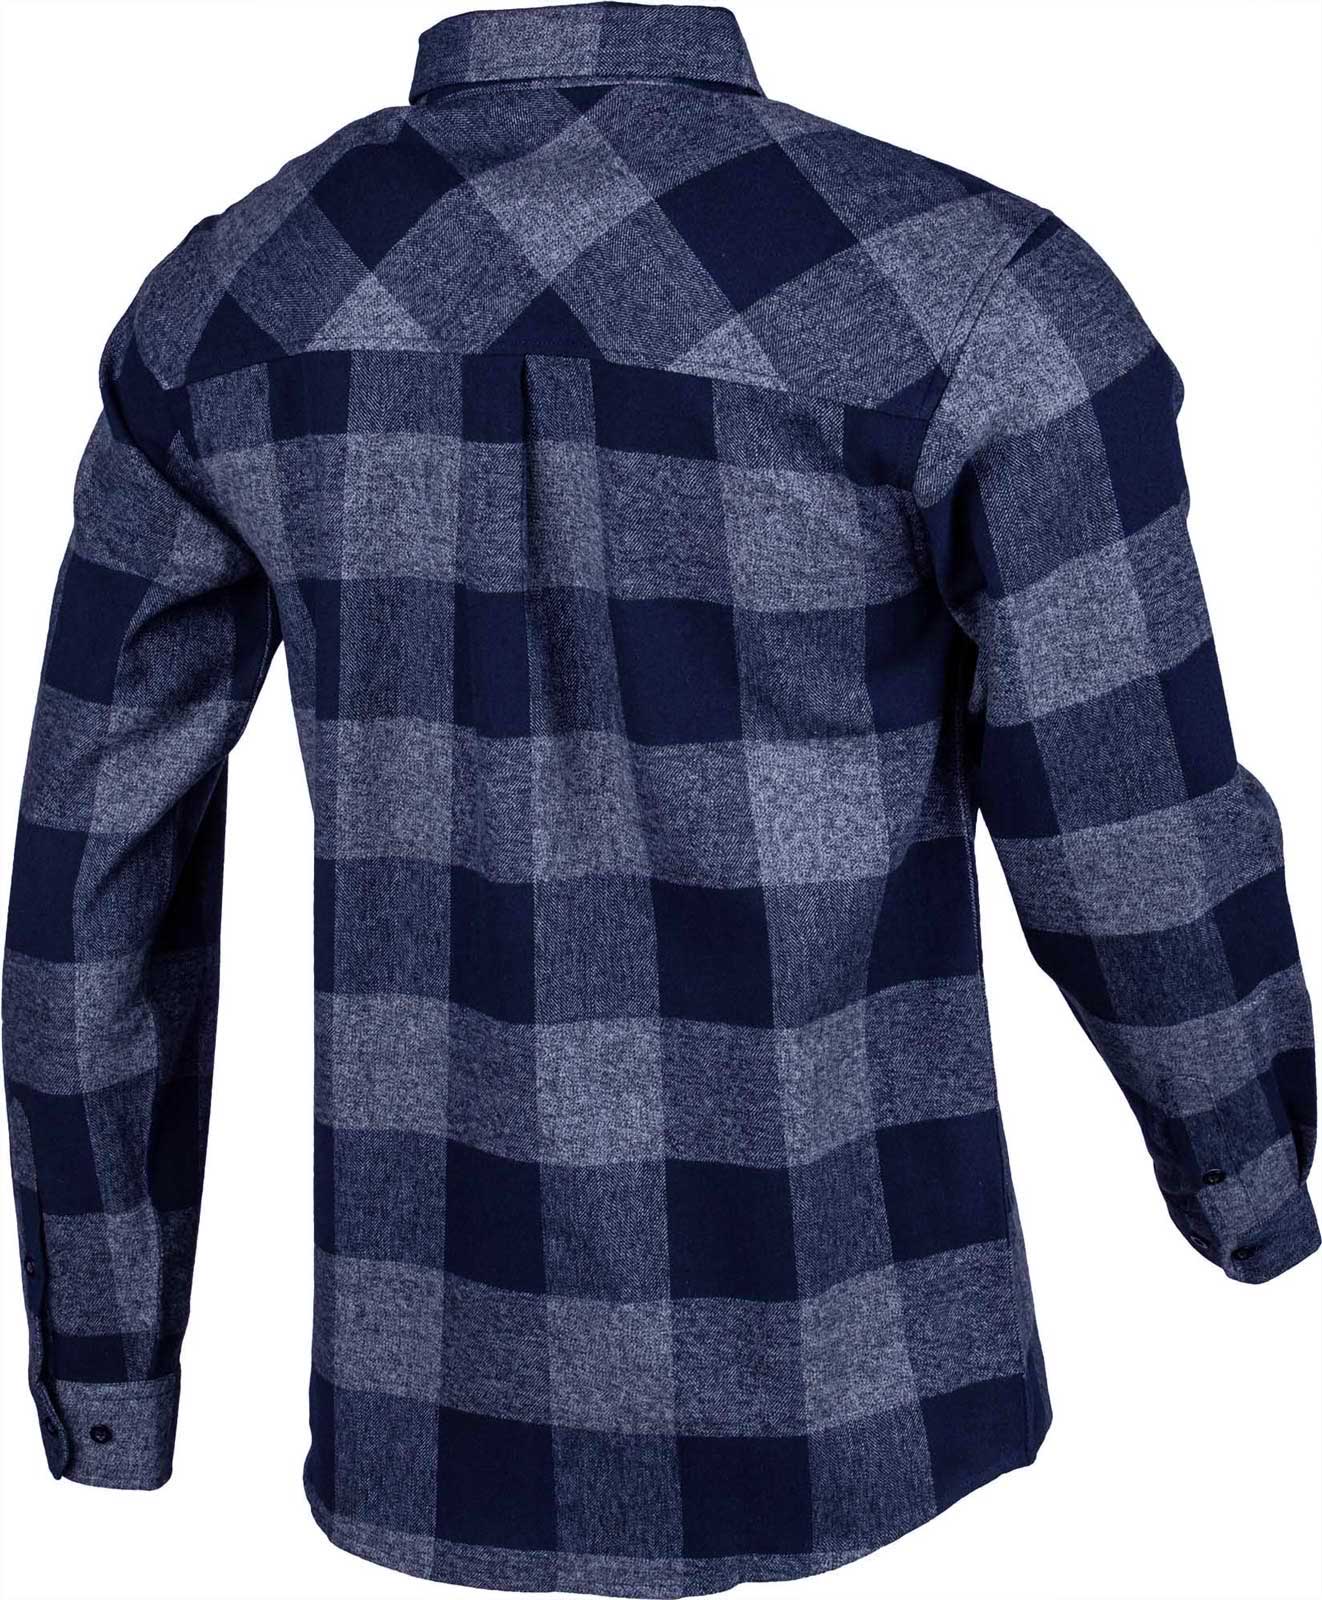 Men’s flannel shirt